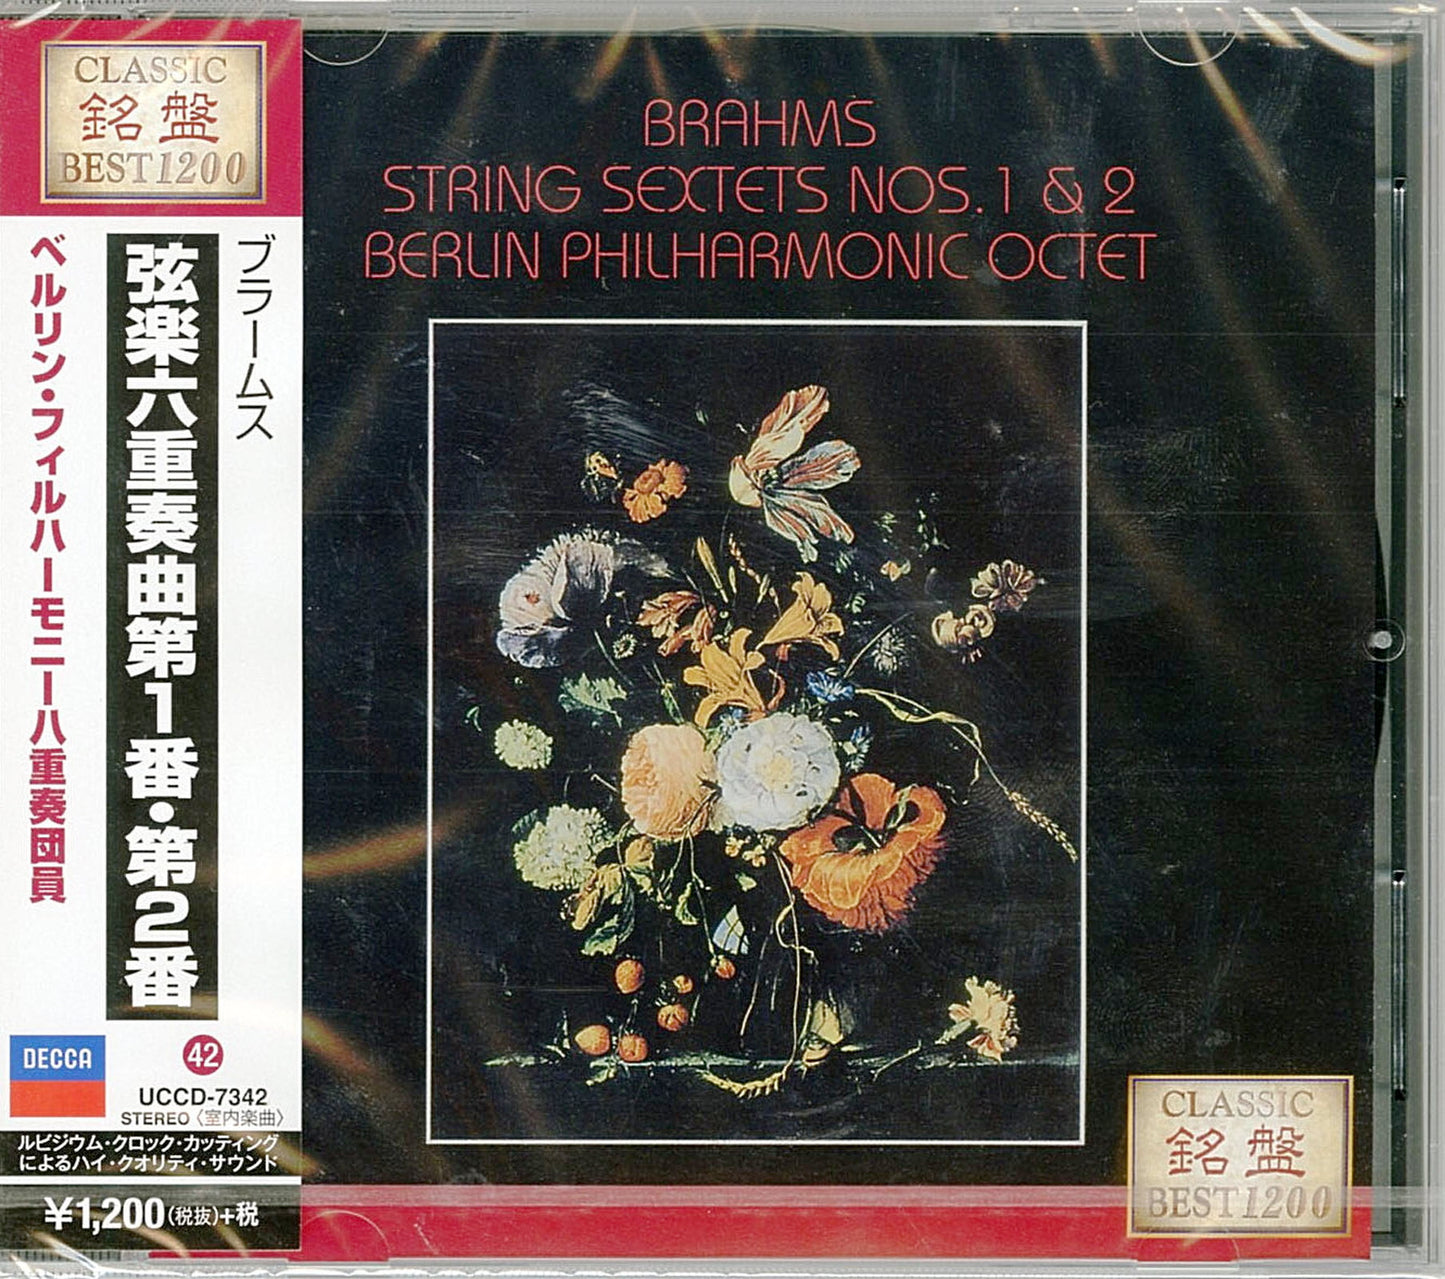 Members Of The Berlin Philharmonic Octet - Brahms: String Sextets Nos. 1 & 2 - Japan CD